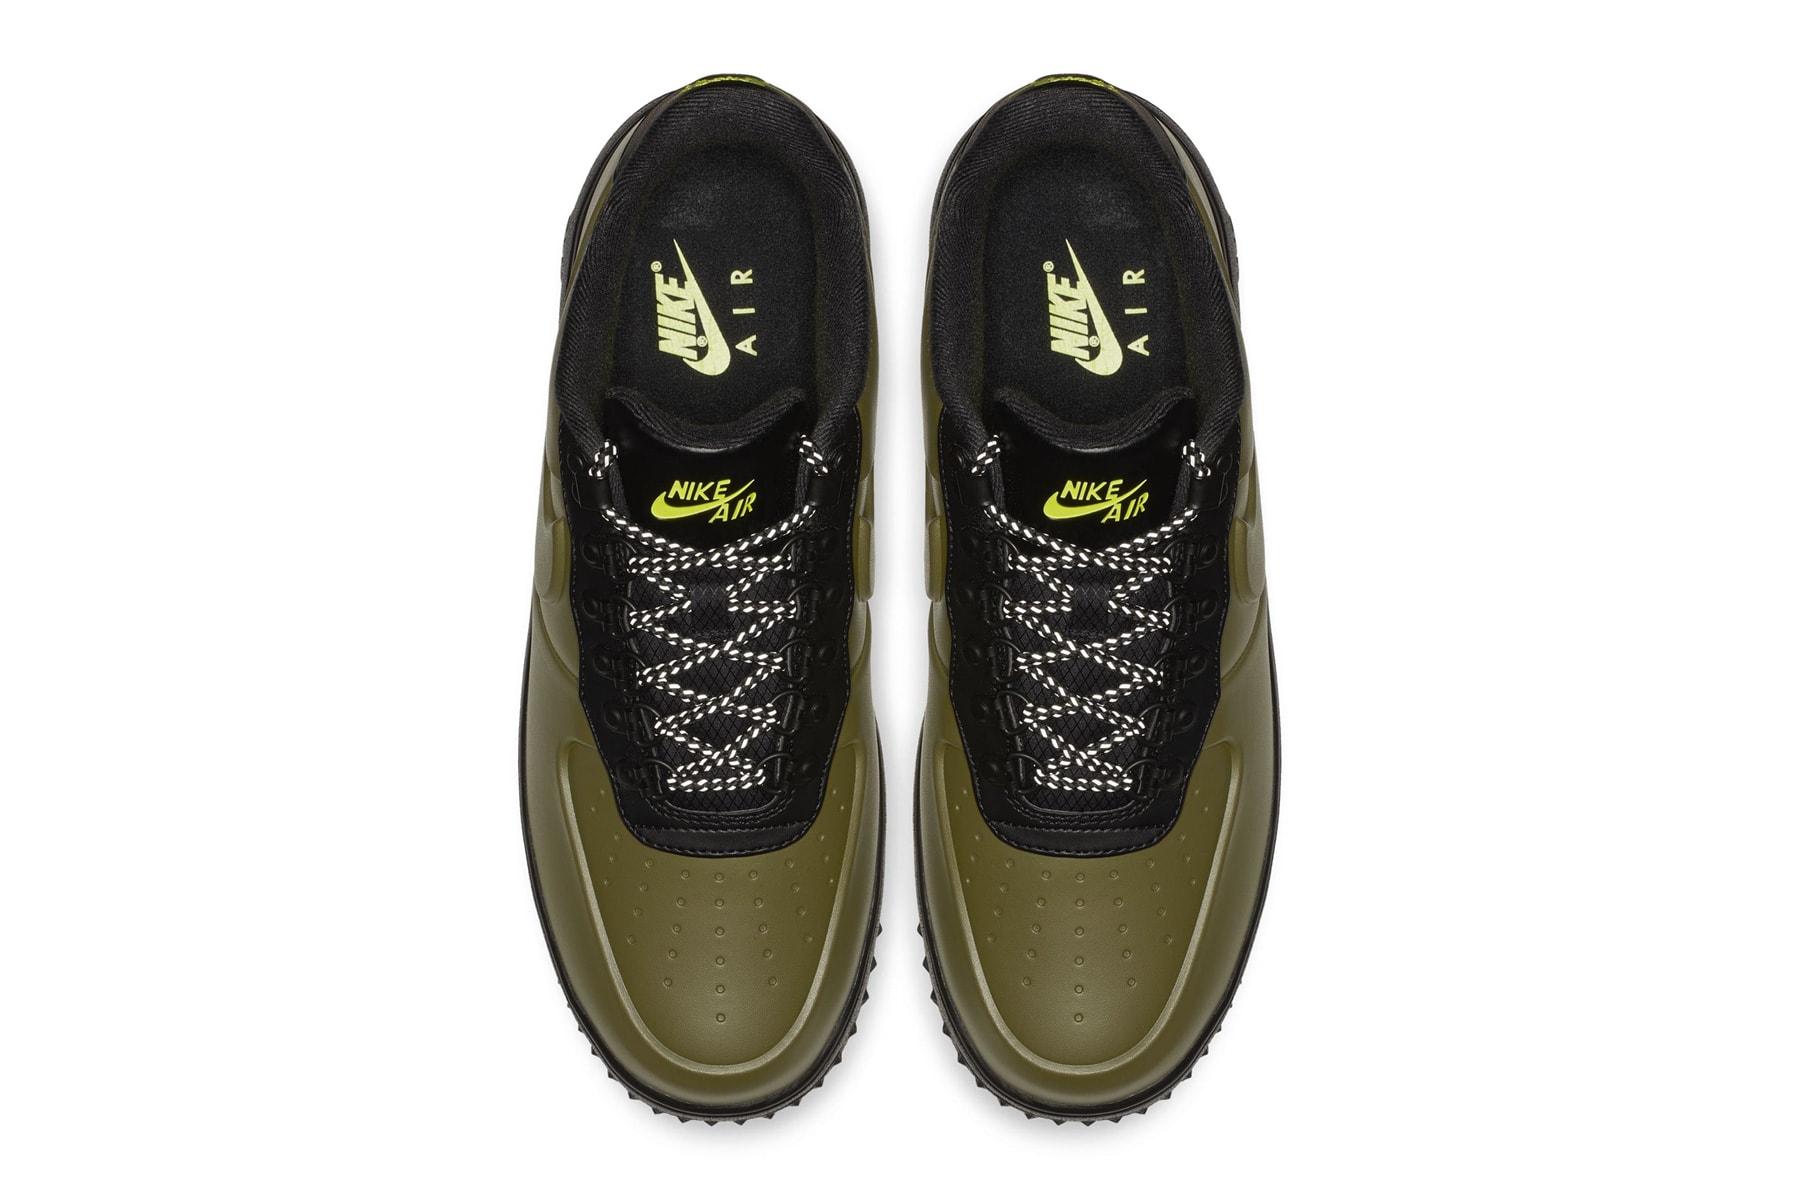 Nike Lunar Force 1 Duckboot Low olive release colorway sneaker hiking price